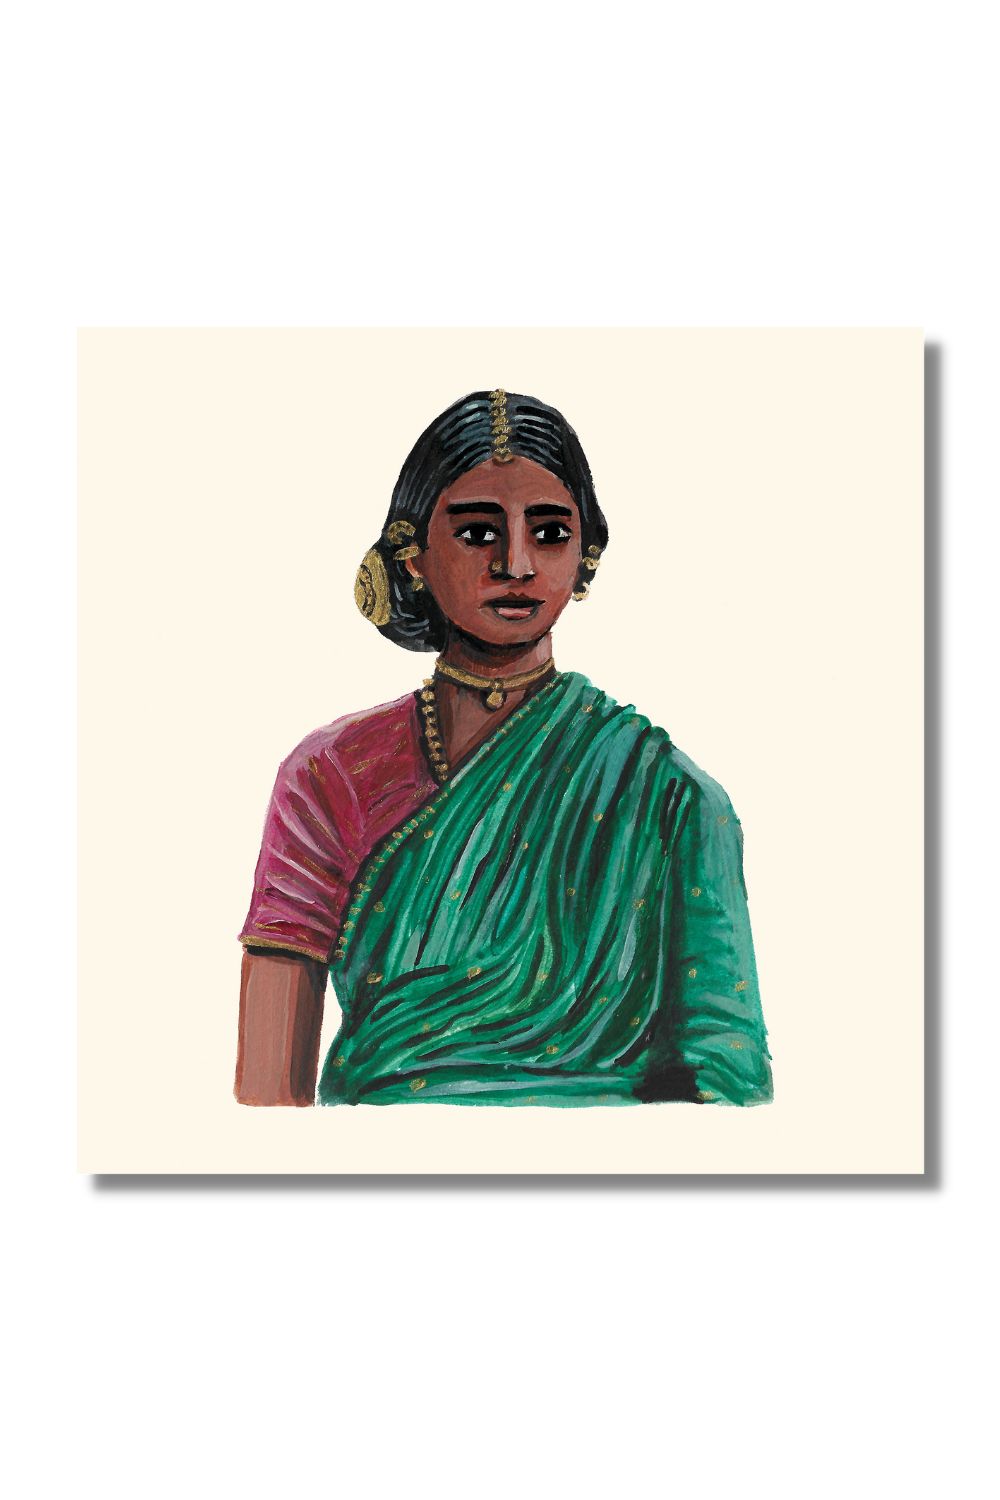 WOMEN OF CEYLON SERIES 2- SET 2 Art Namrata Kumar 